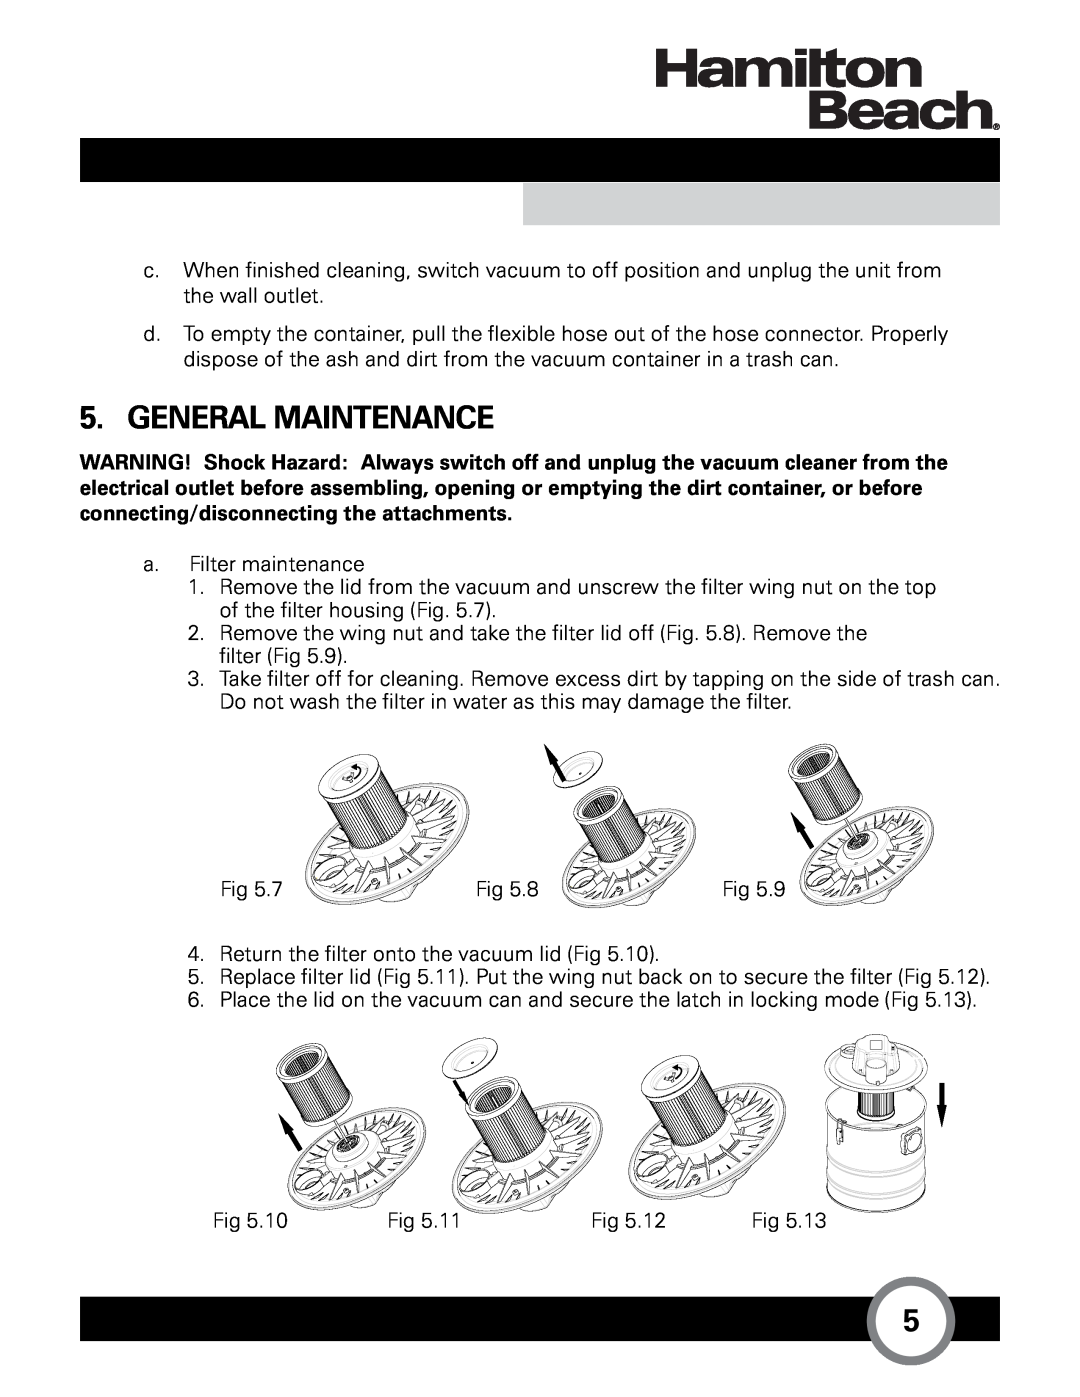 Hamilton Beach HB-405 owner manual General Maintenance 